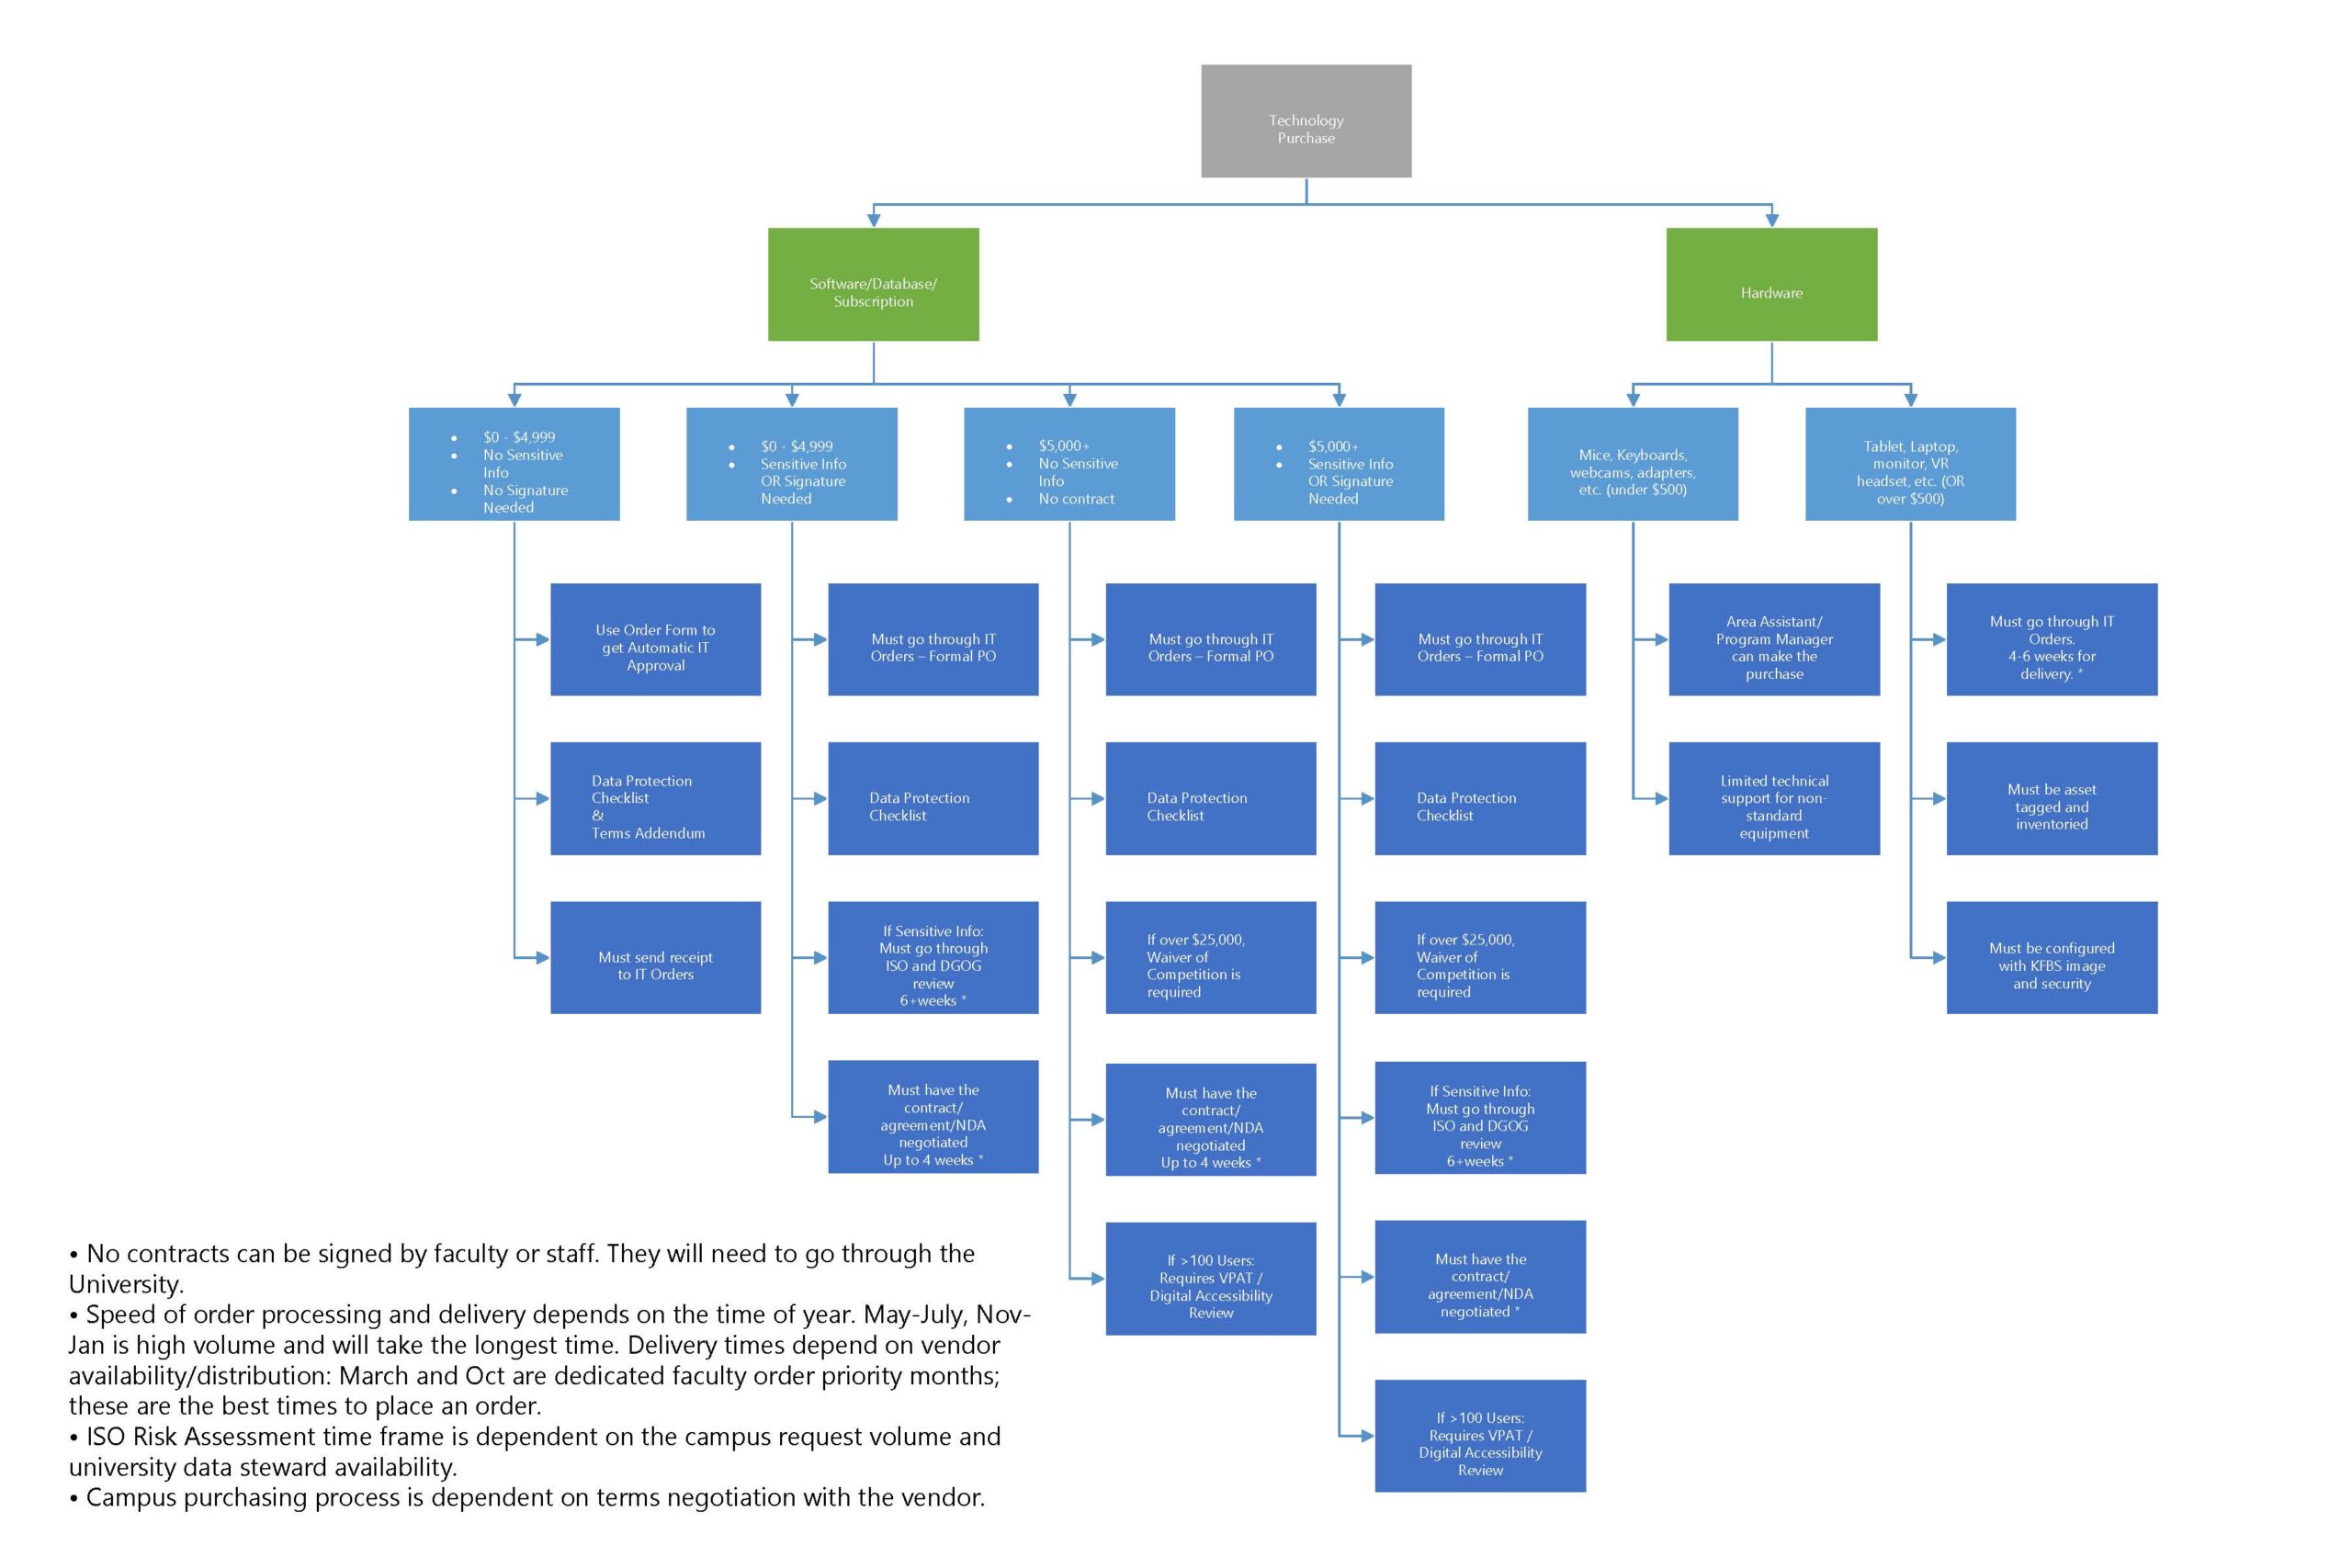 Workflow diagram of the Kenan-Flagler IT purchasing process.